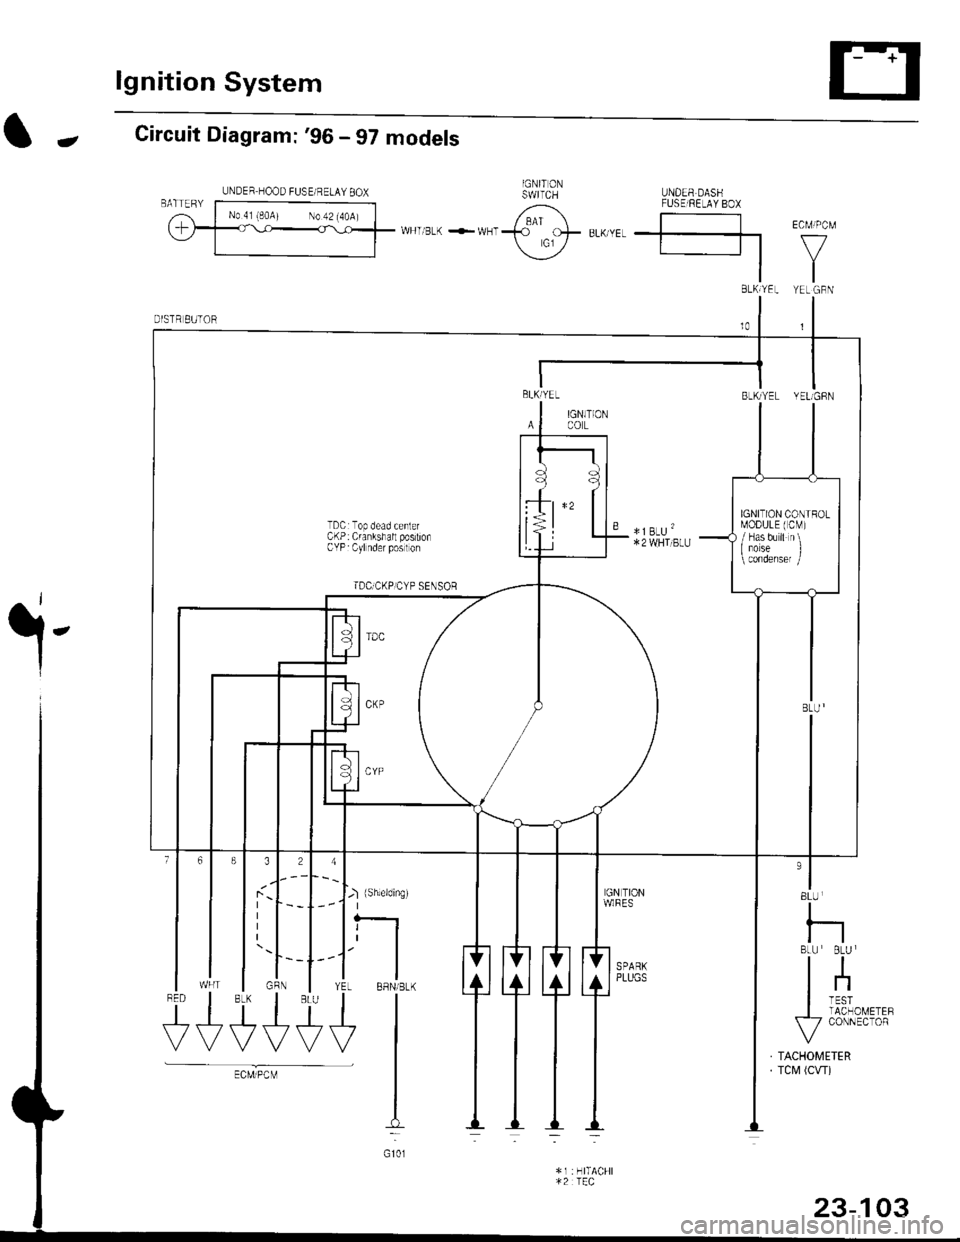 HONDA CIVIC 1999 6.G Workshop Manual lgnition System
-Circuit Diagram: 96 - 97 models
.i-
8LU
I
nBLU BLU I
tl
lnI TESTI TACHOMETEF\-7 CONNECTOR
TACHOMETERTCM (CW)
J-) {sh,eldinsrt I
tfYEL BBN/BLK
+l
I:
G101
$t+++
UNDER HOOD FUSE/ RELAY